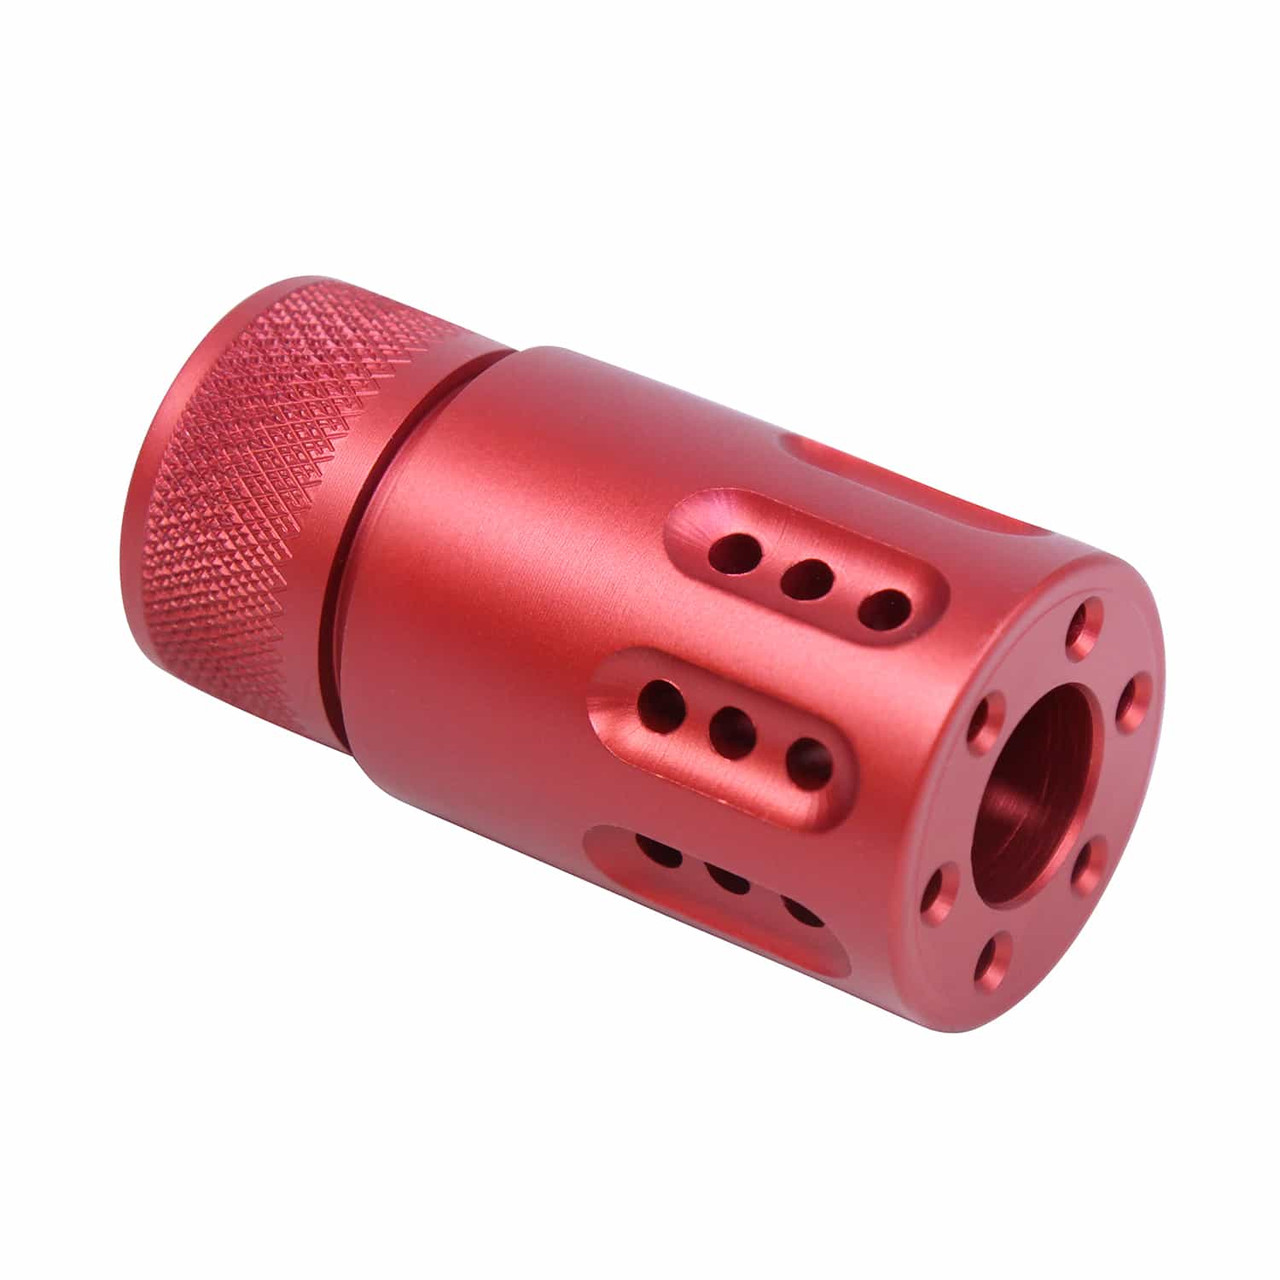 Guntec USA 1326-MB-P-MINI-RED Mini Slip Over Barrel Shroud With Multi Port Muzzle Brake (Anodized Red)